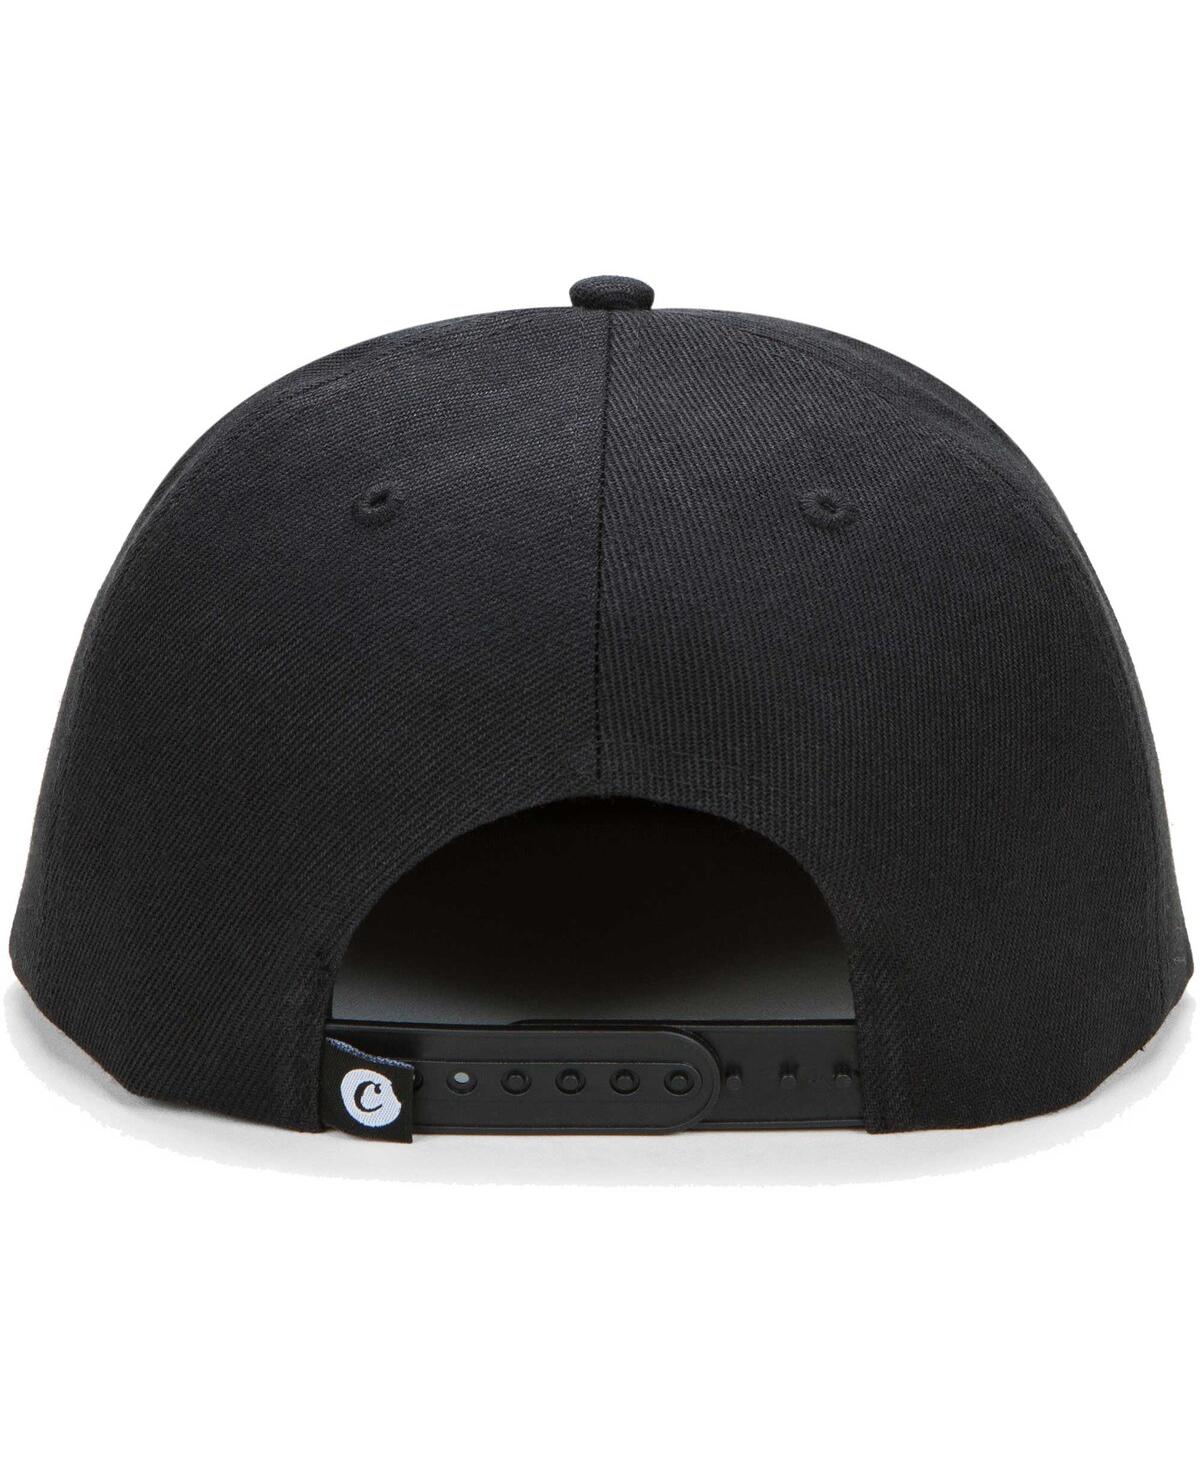 Shop Cookies Men's  Clothing Black On The Block Snapback Hat